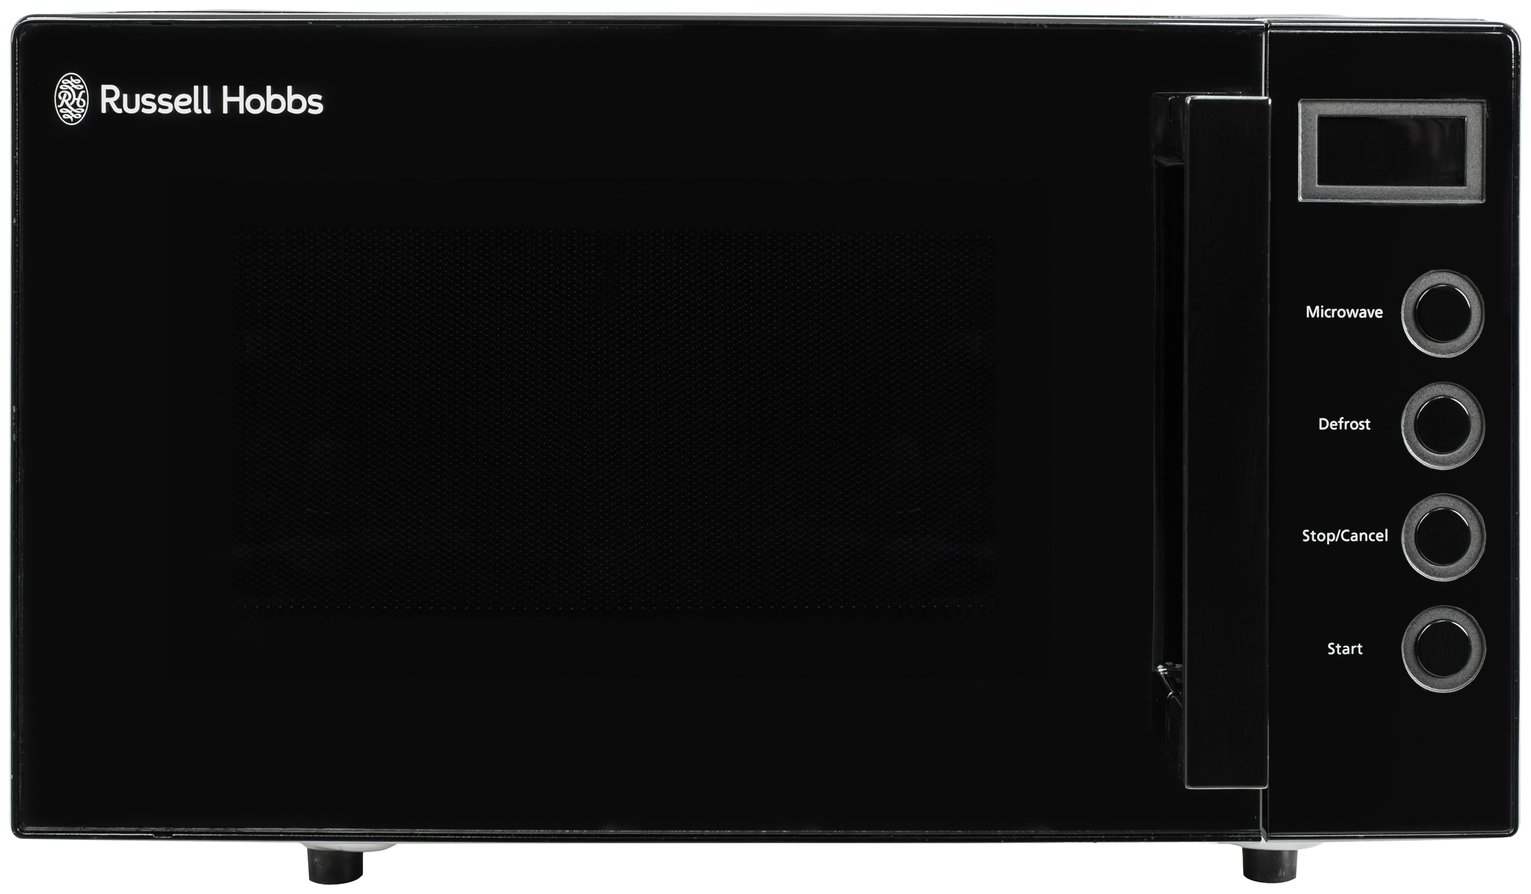 Russell Hobbs 700W Standard Microwave RHEM1901B - Black